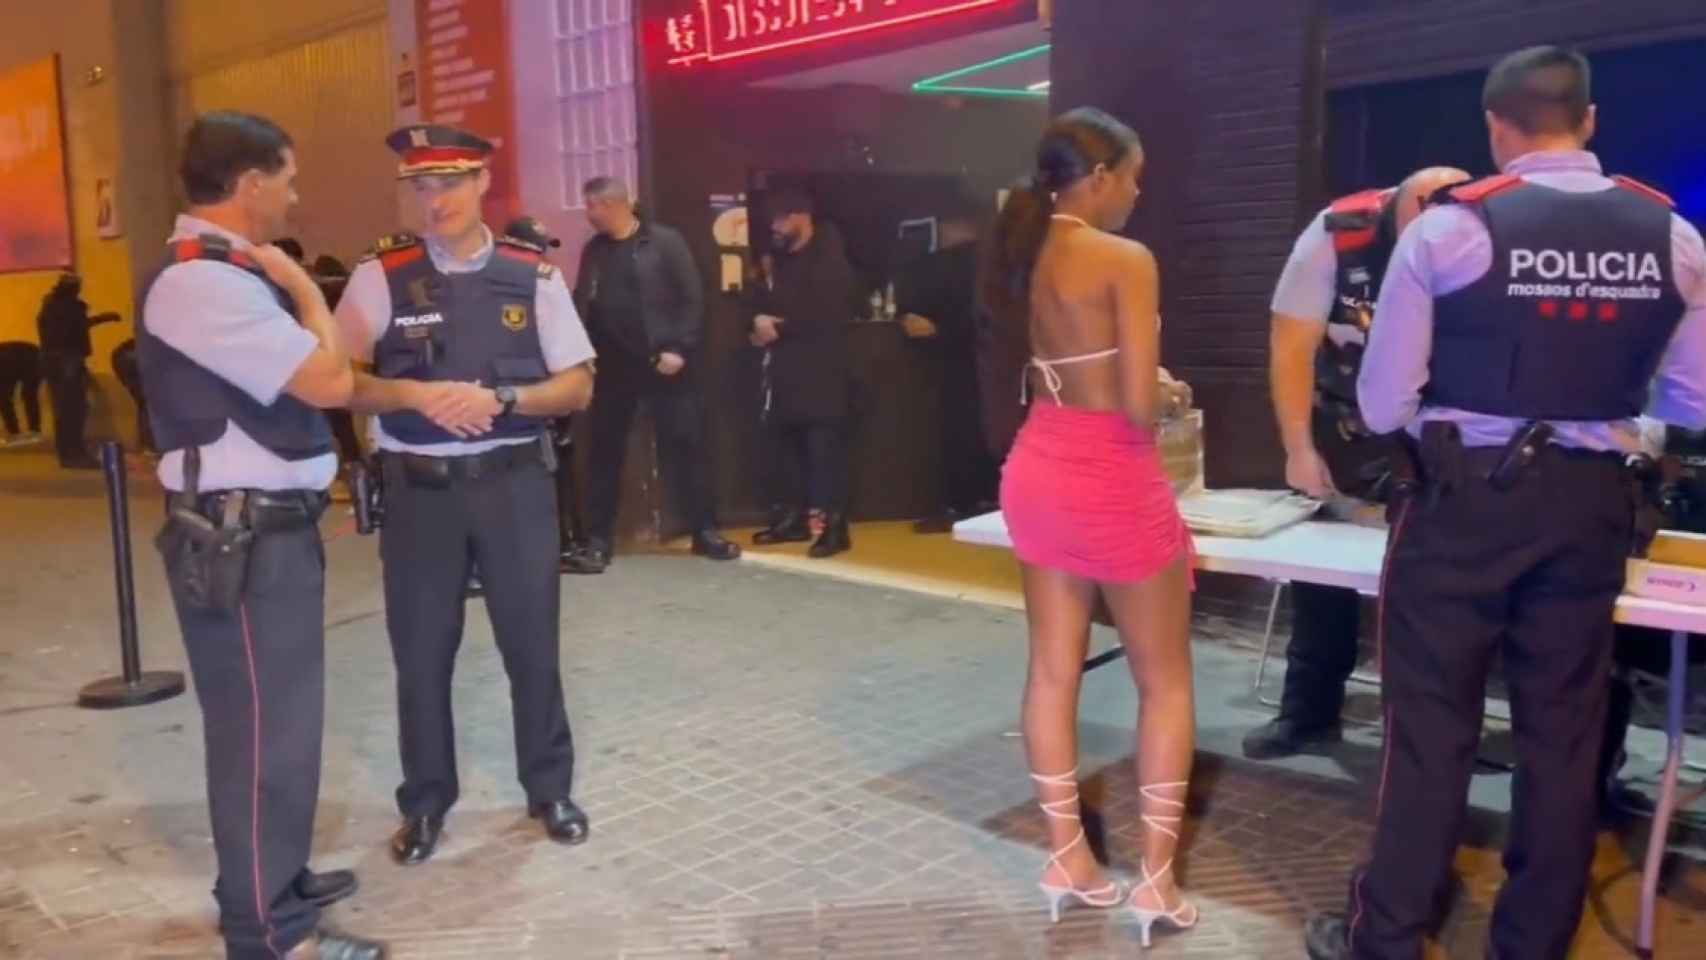 Los Mossos d'Esquadra detienen a un hombre en la misma discoteca donde murió un joven por arma blanca / EUROPA PRESS